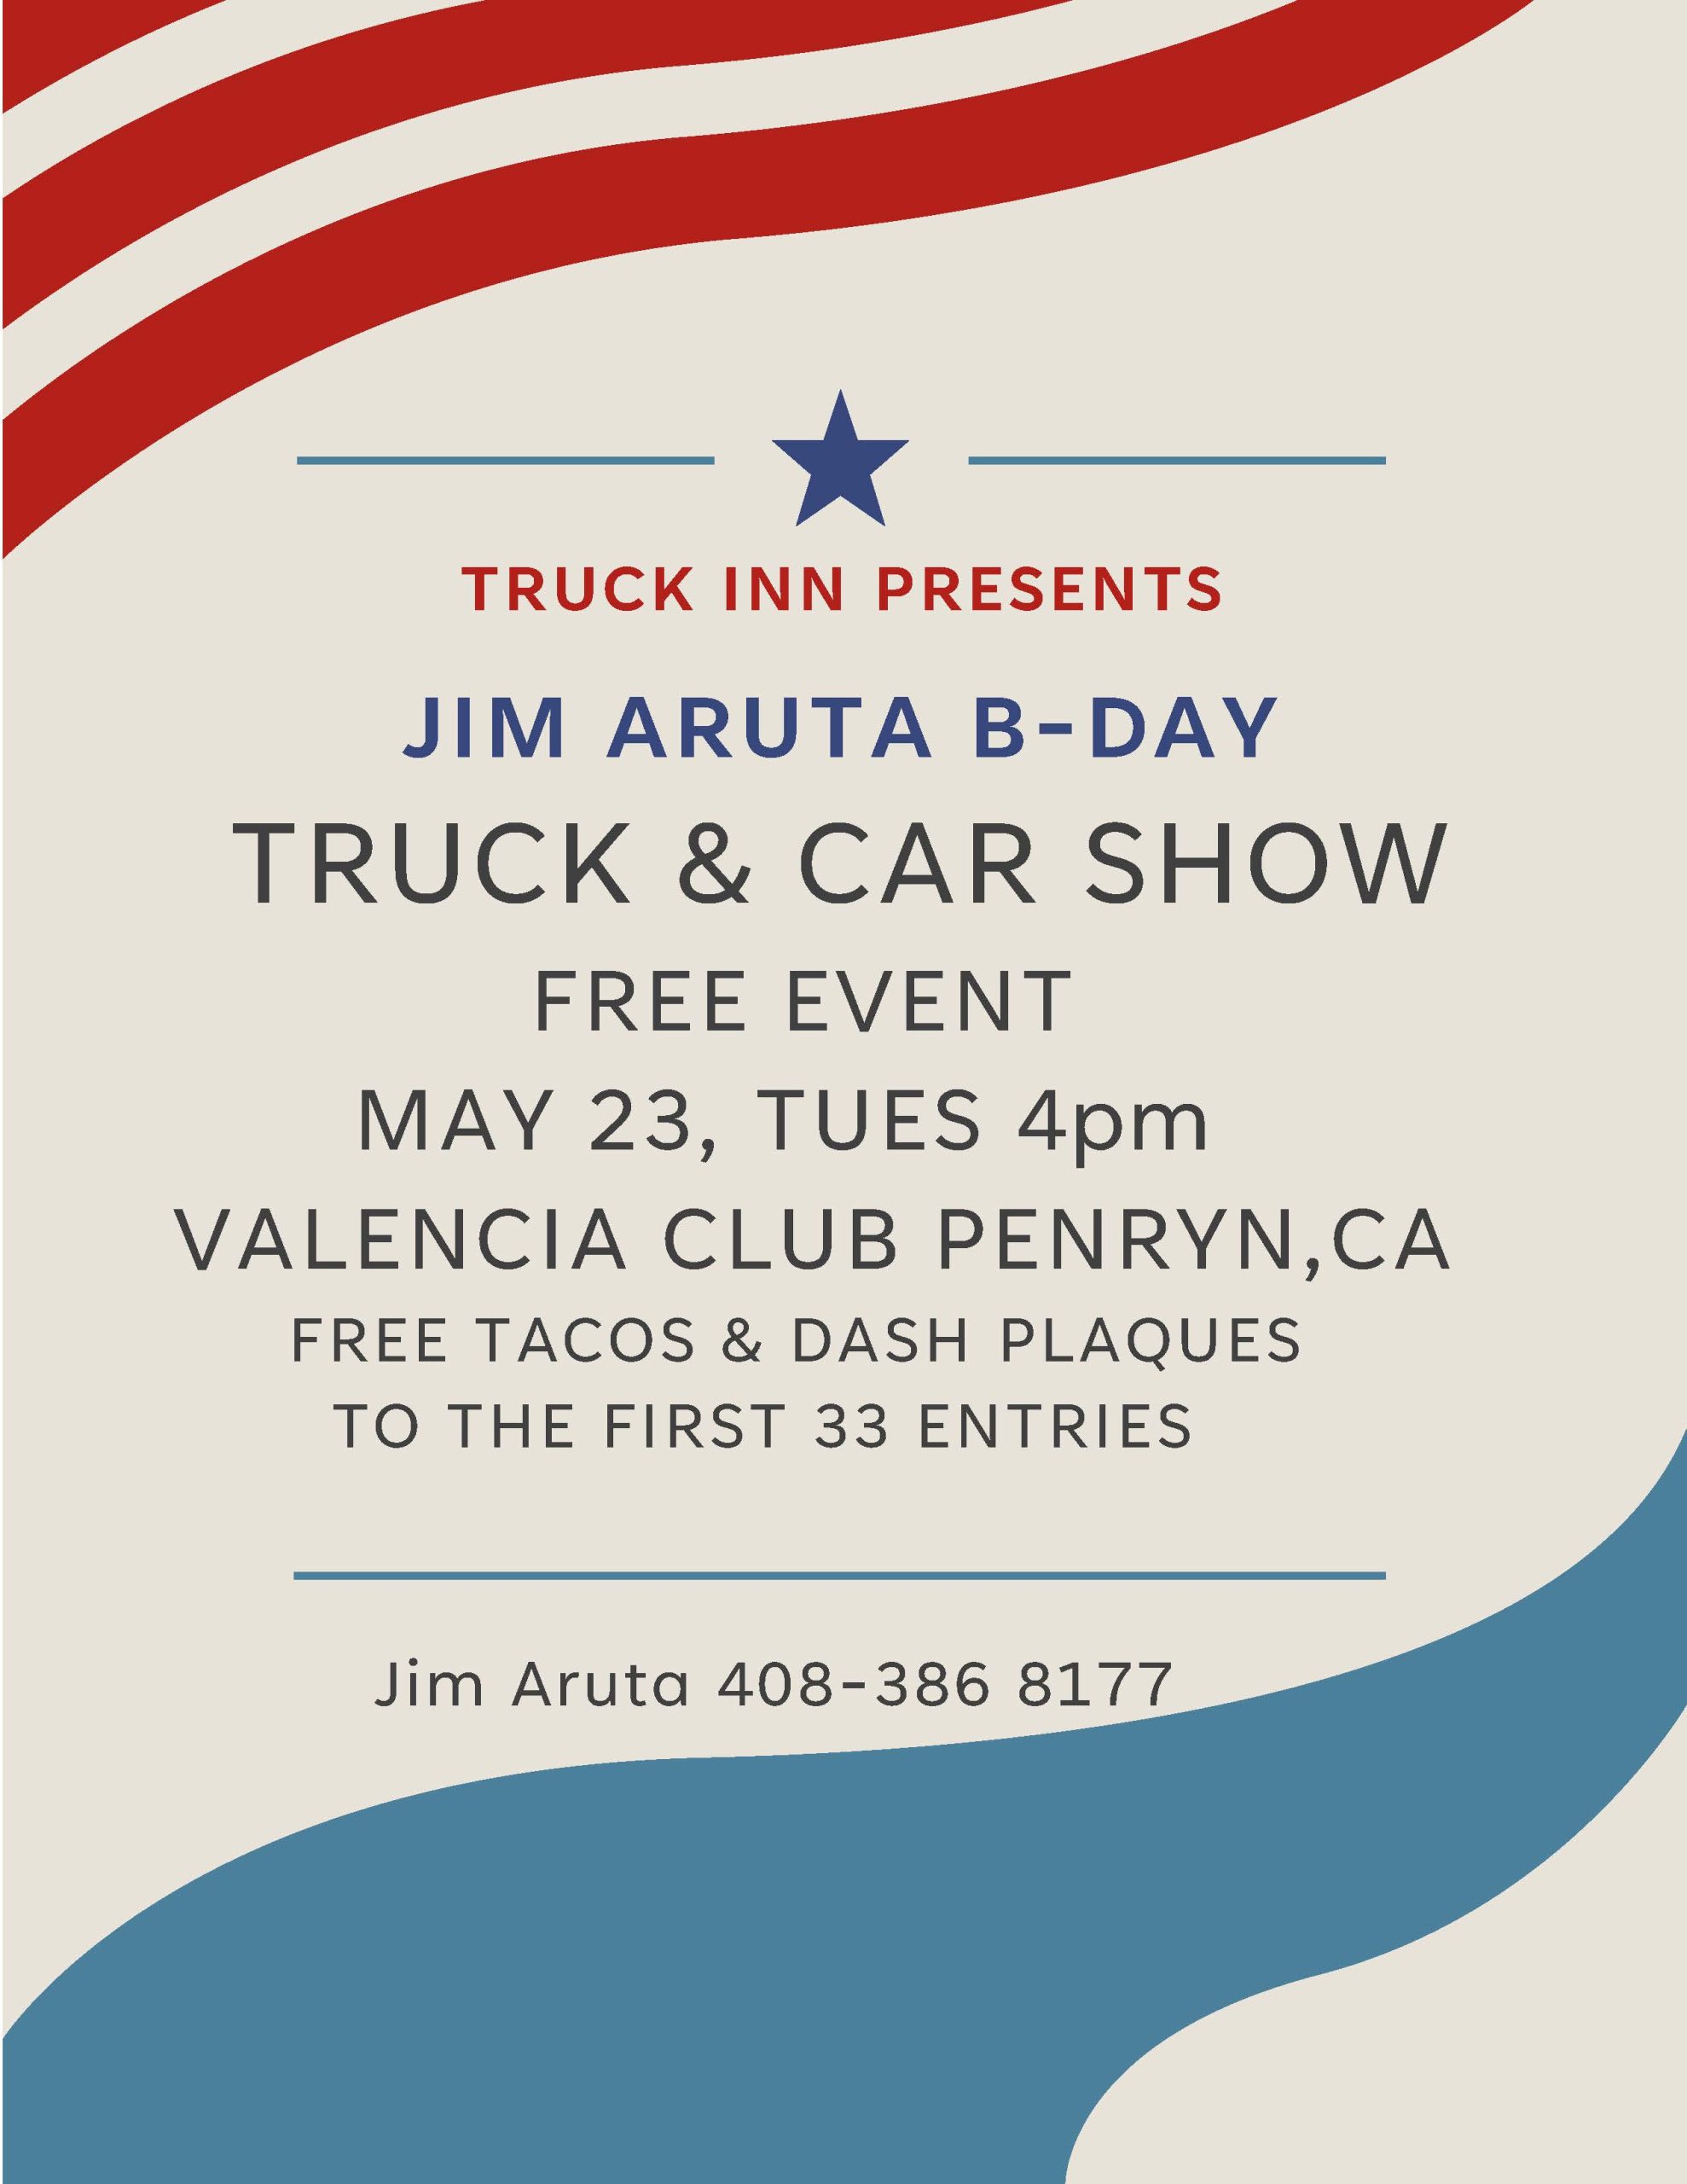 Jim Aruta's Birthday Car Show